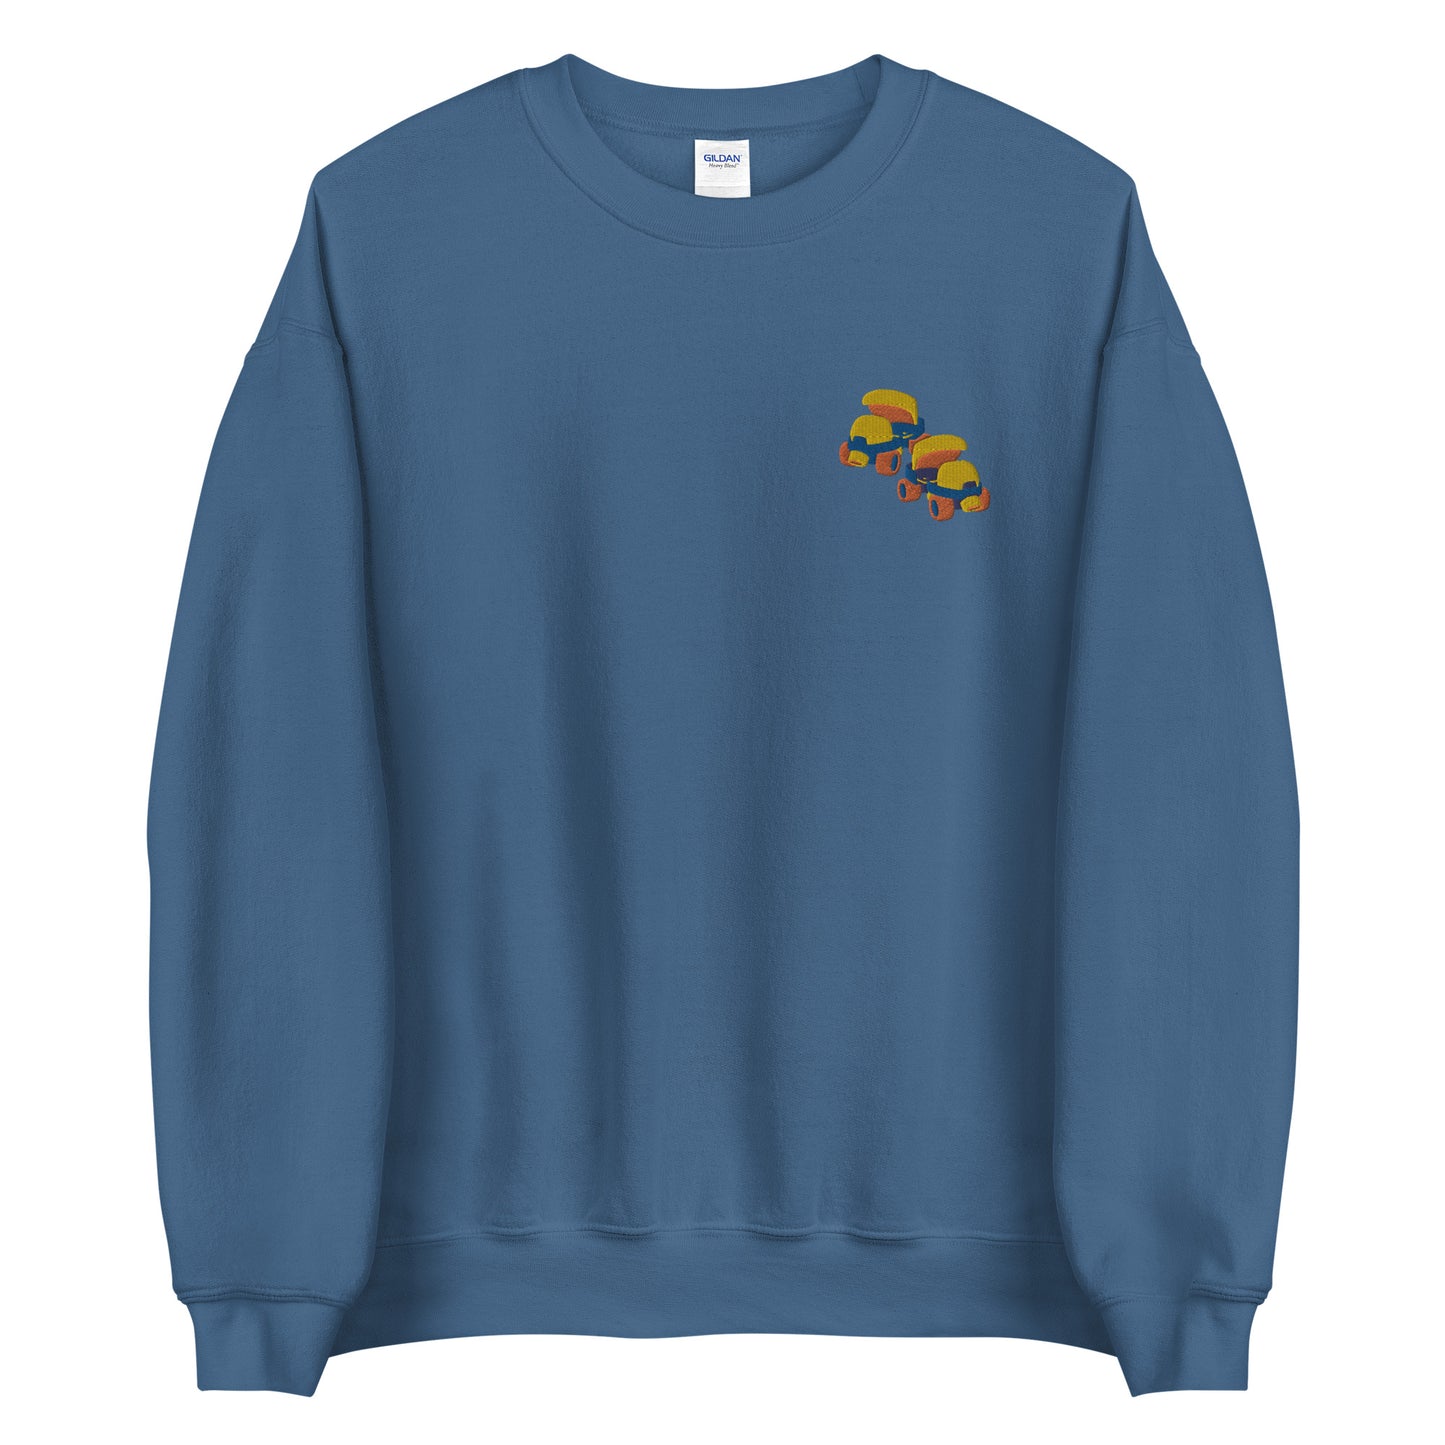 Roller Sk80s embroidered crewneck sweatshirt